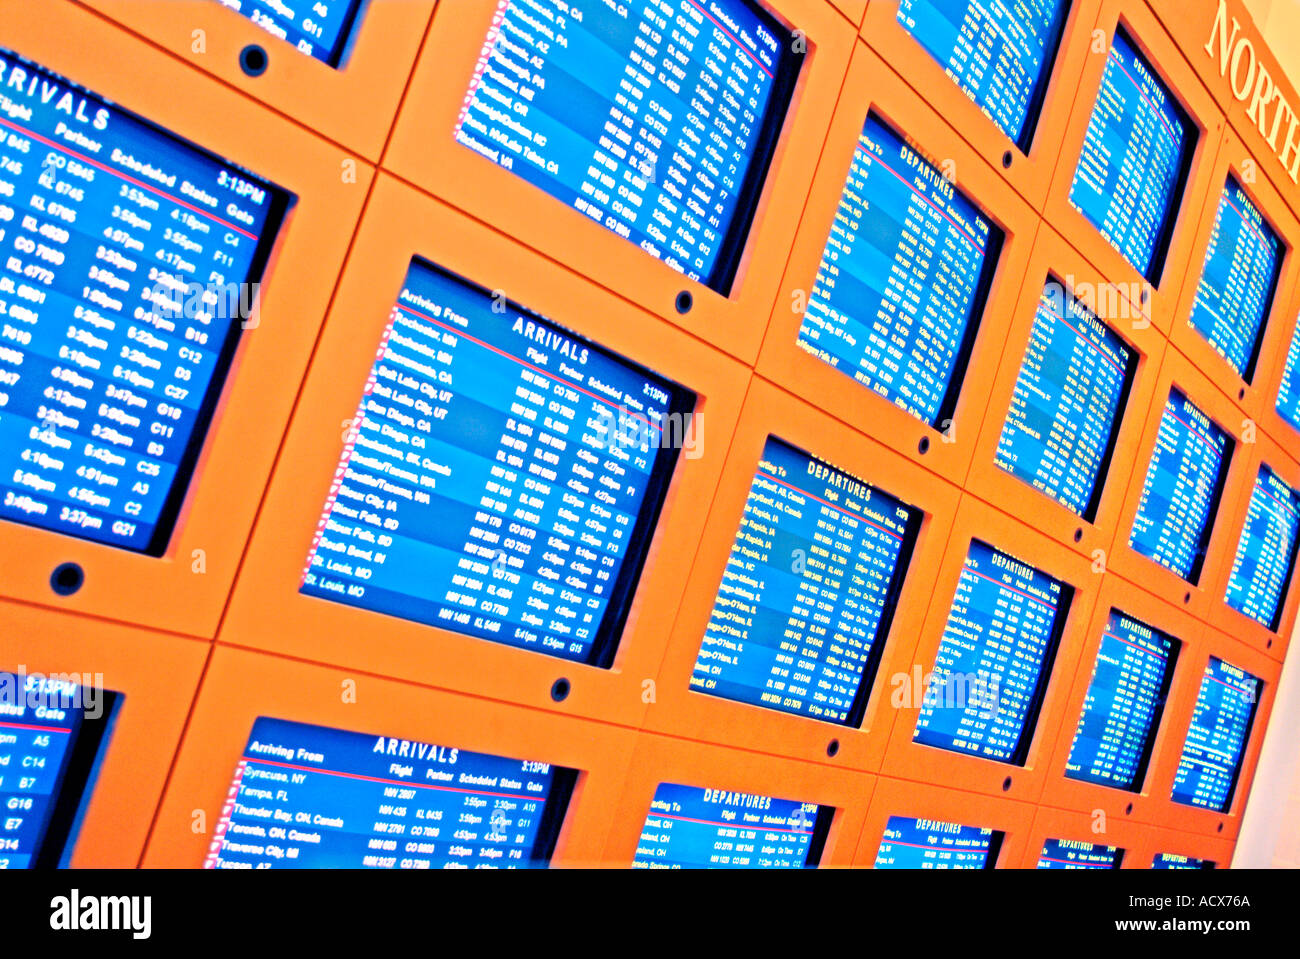 Multiple CRT TV monitors at airport Stock Photo